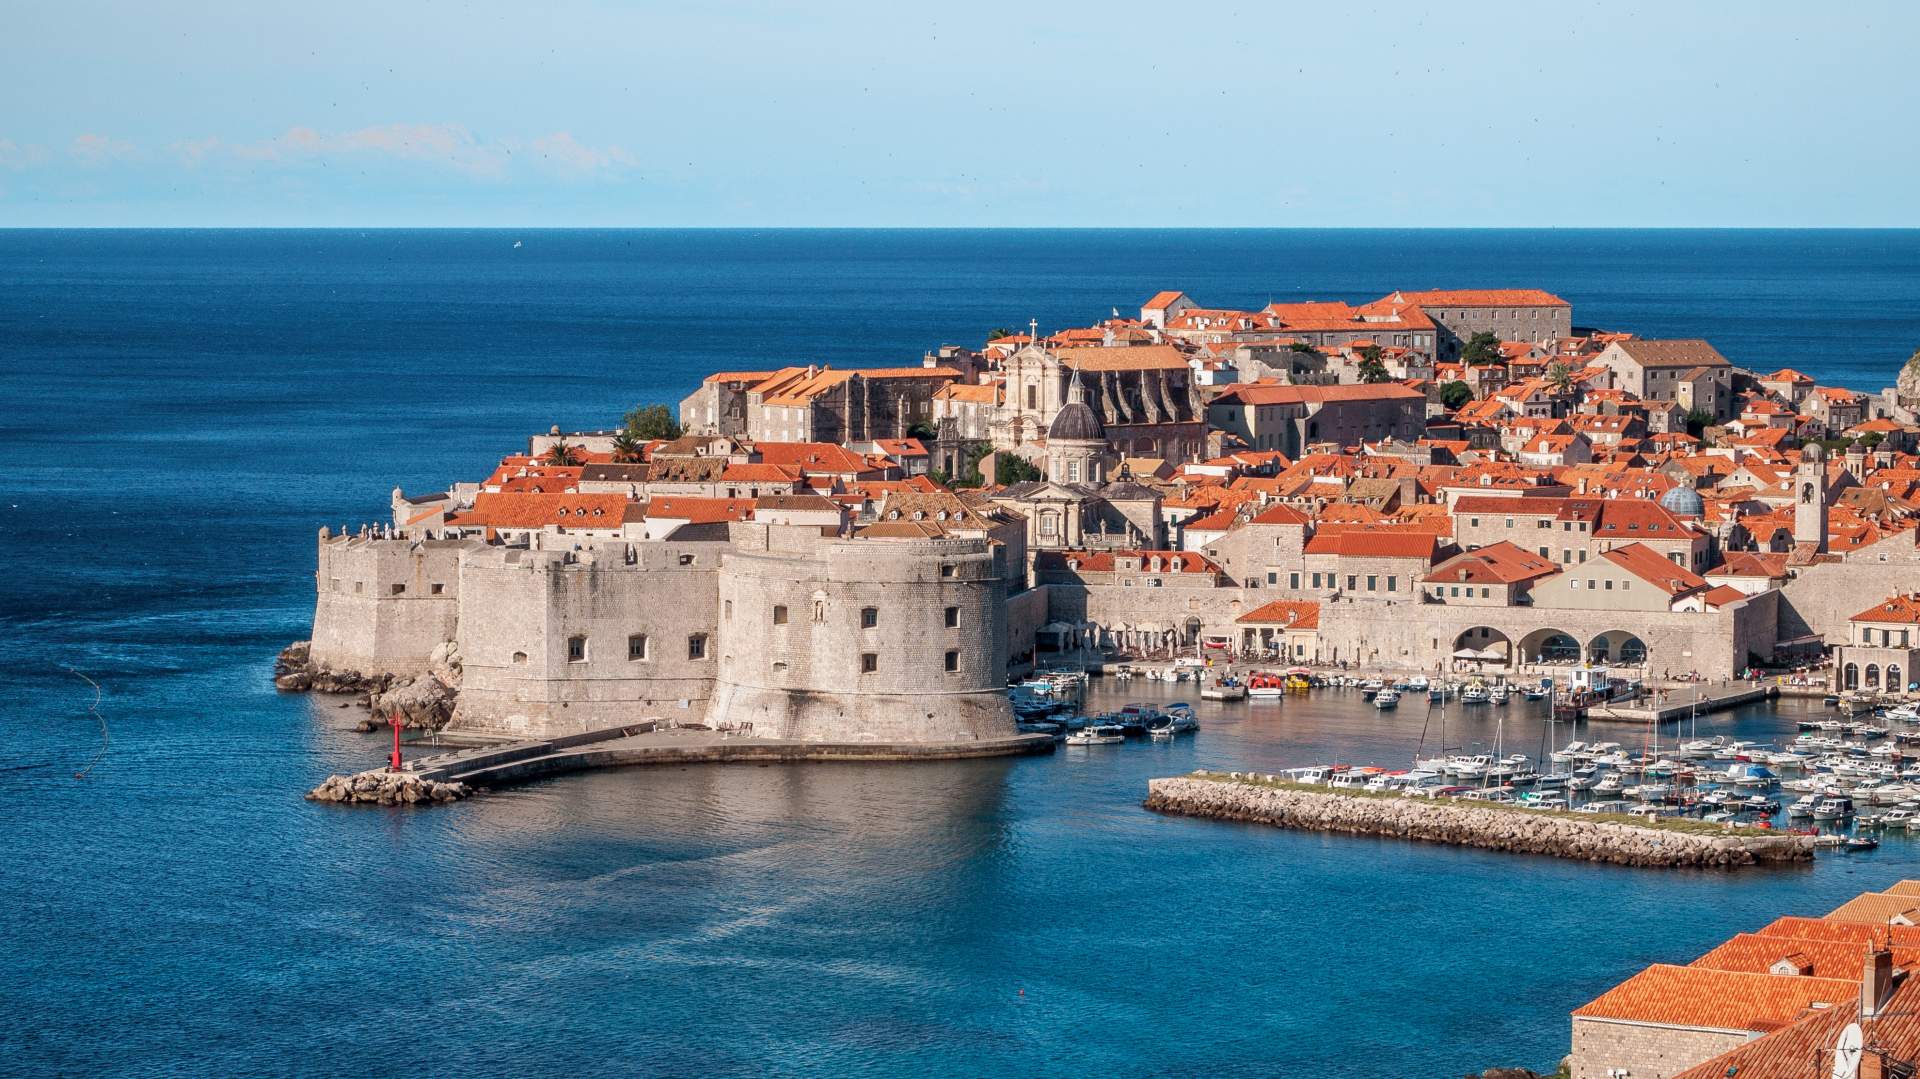 Busreis rondreis Kroatië Dubrovnik ©Ivan Ivankovic from Pixabay